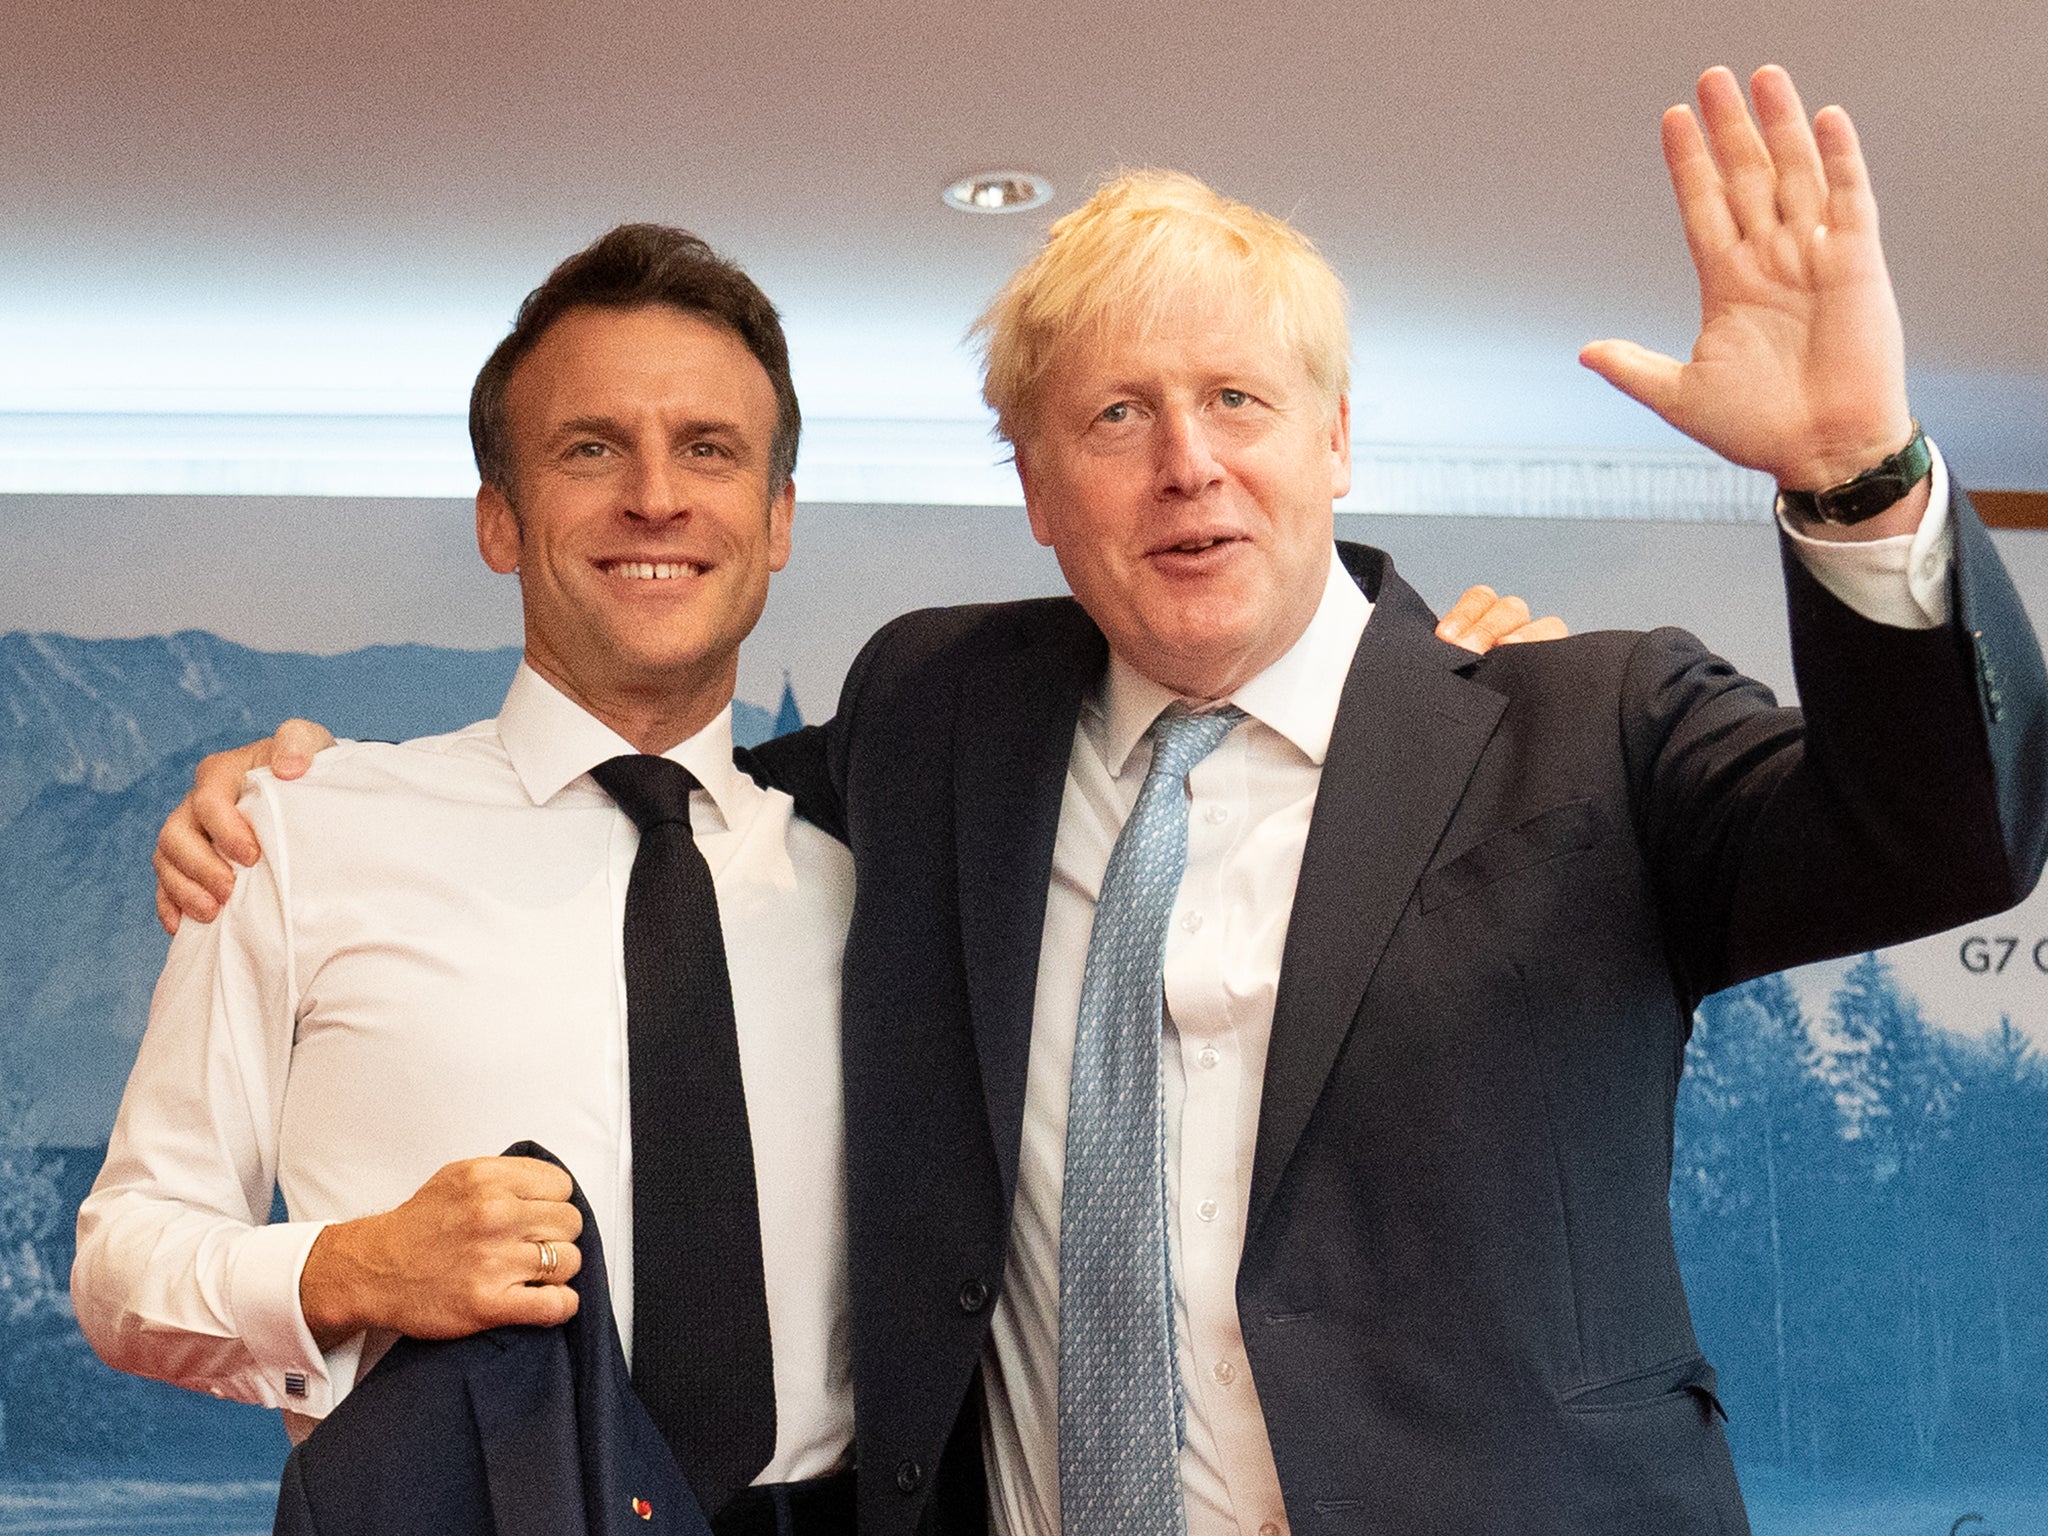 Boris Johnson with Emmanuel Macron at last year’s G7